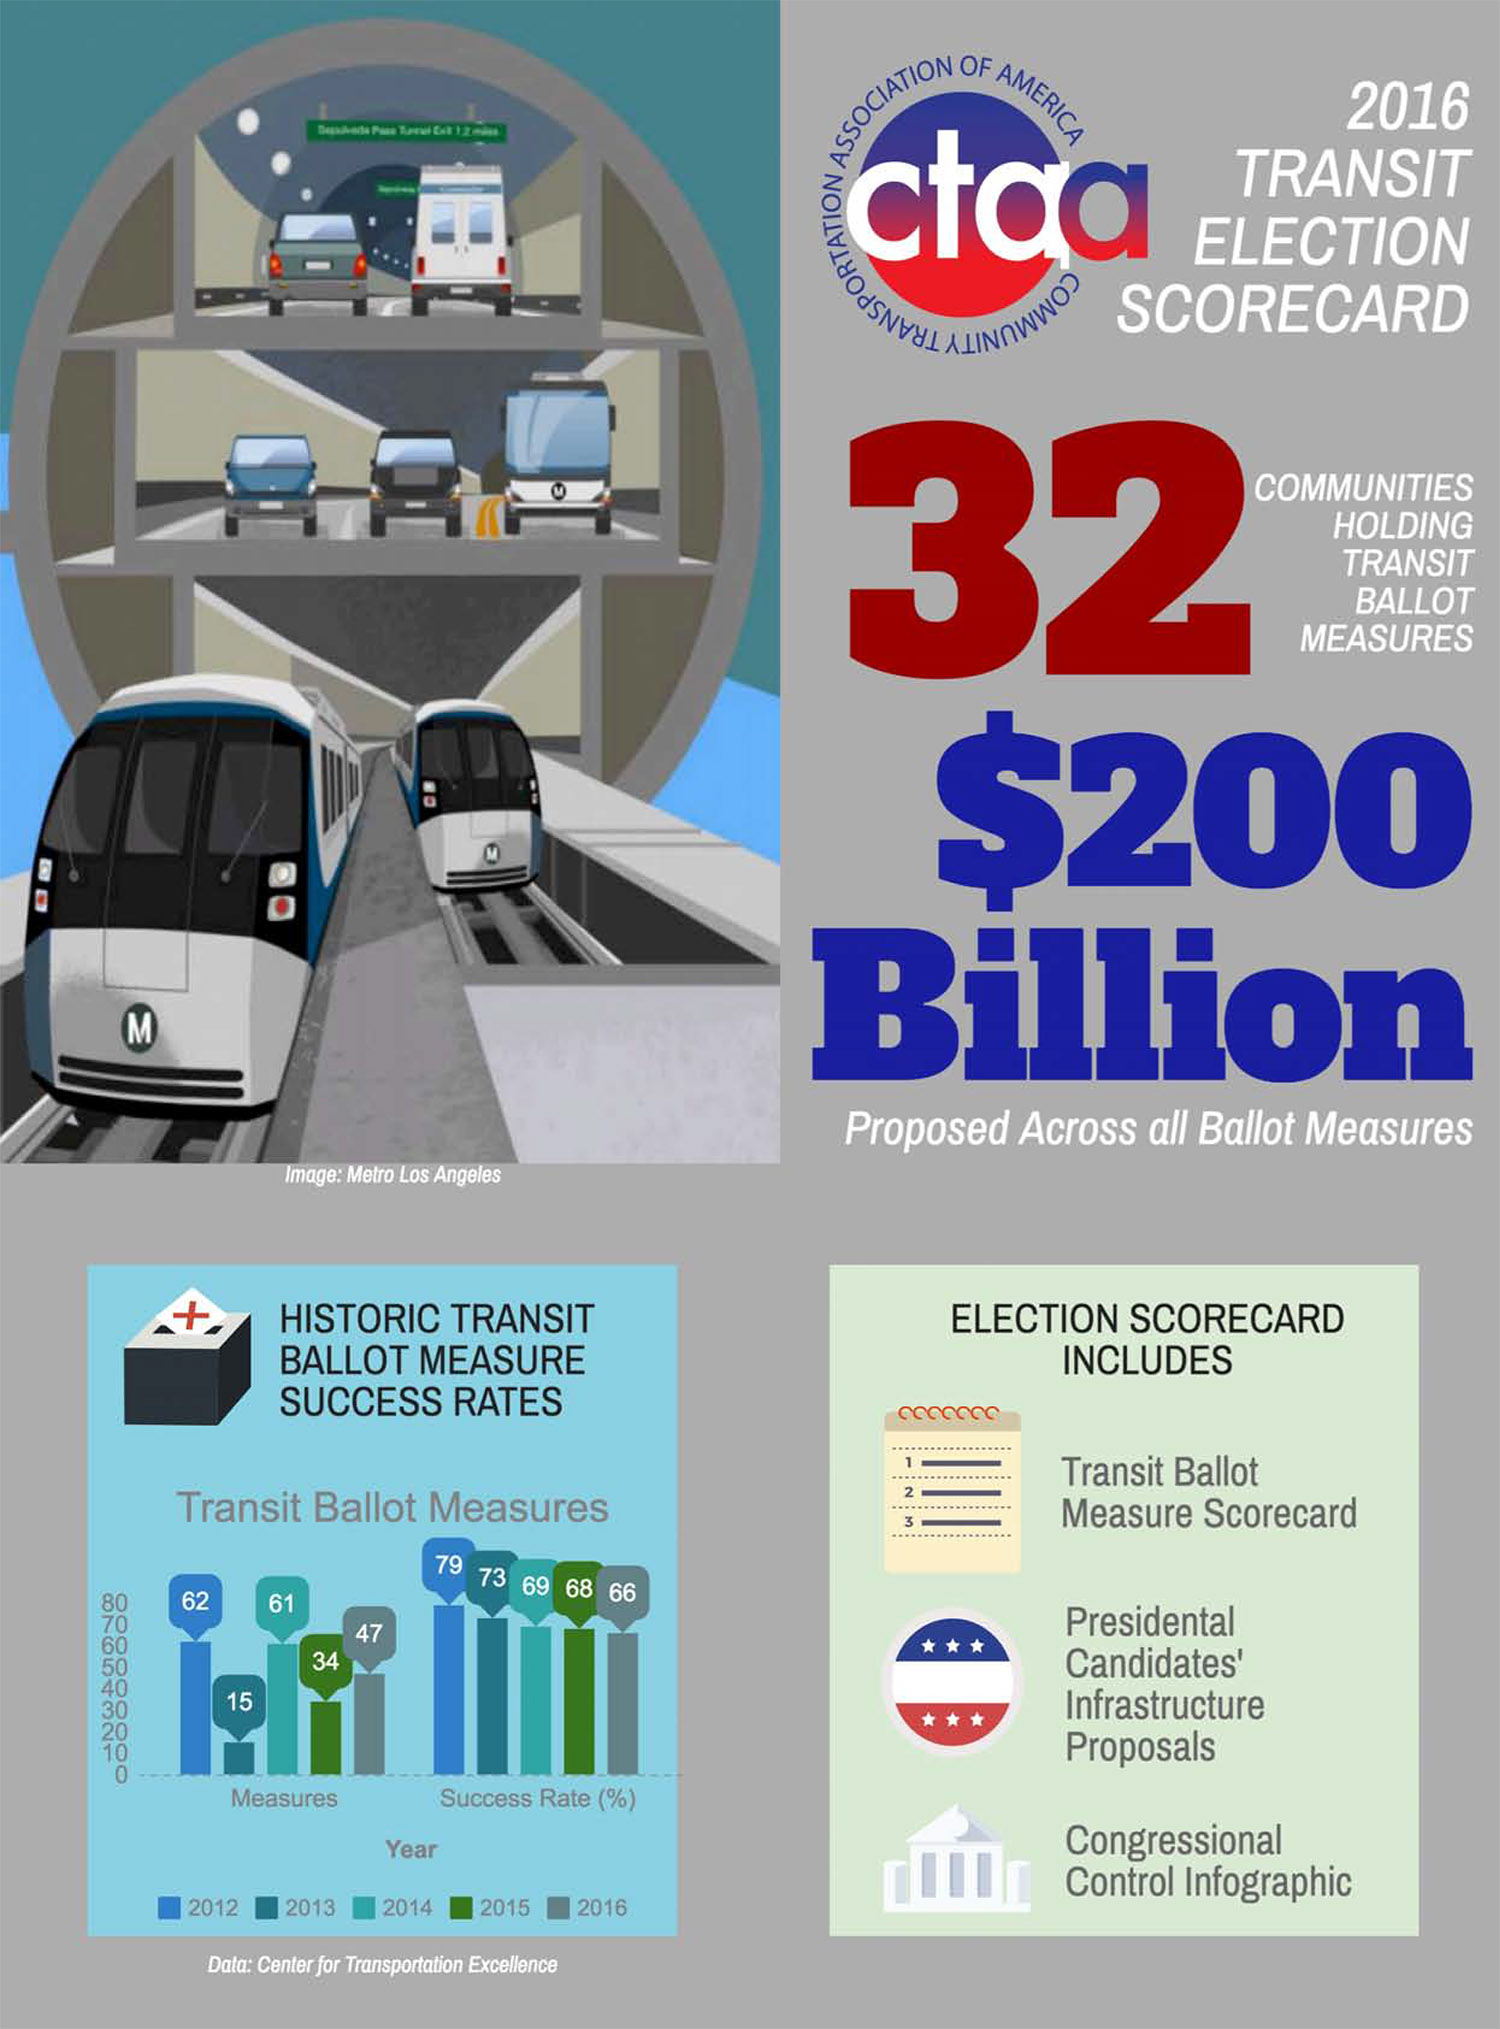 CTAA - 2016 Transit Election Scorecard